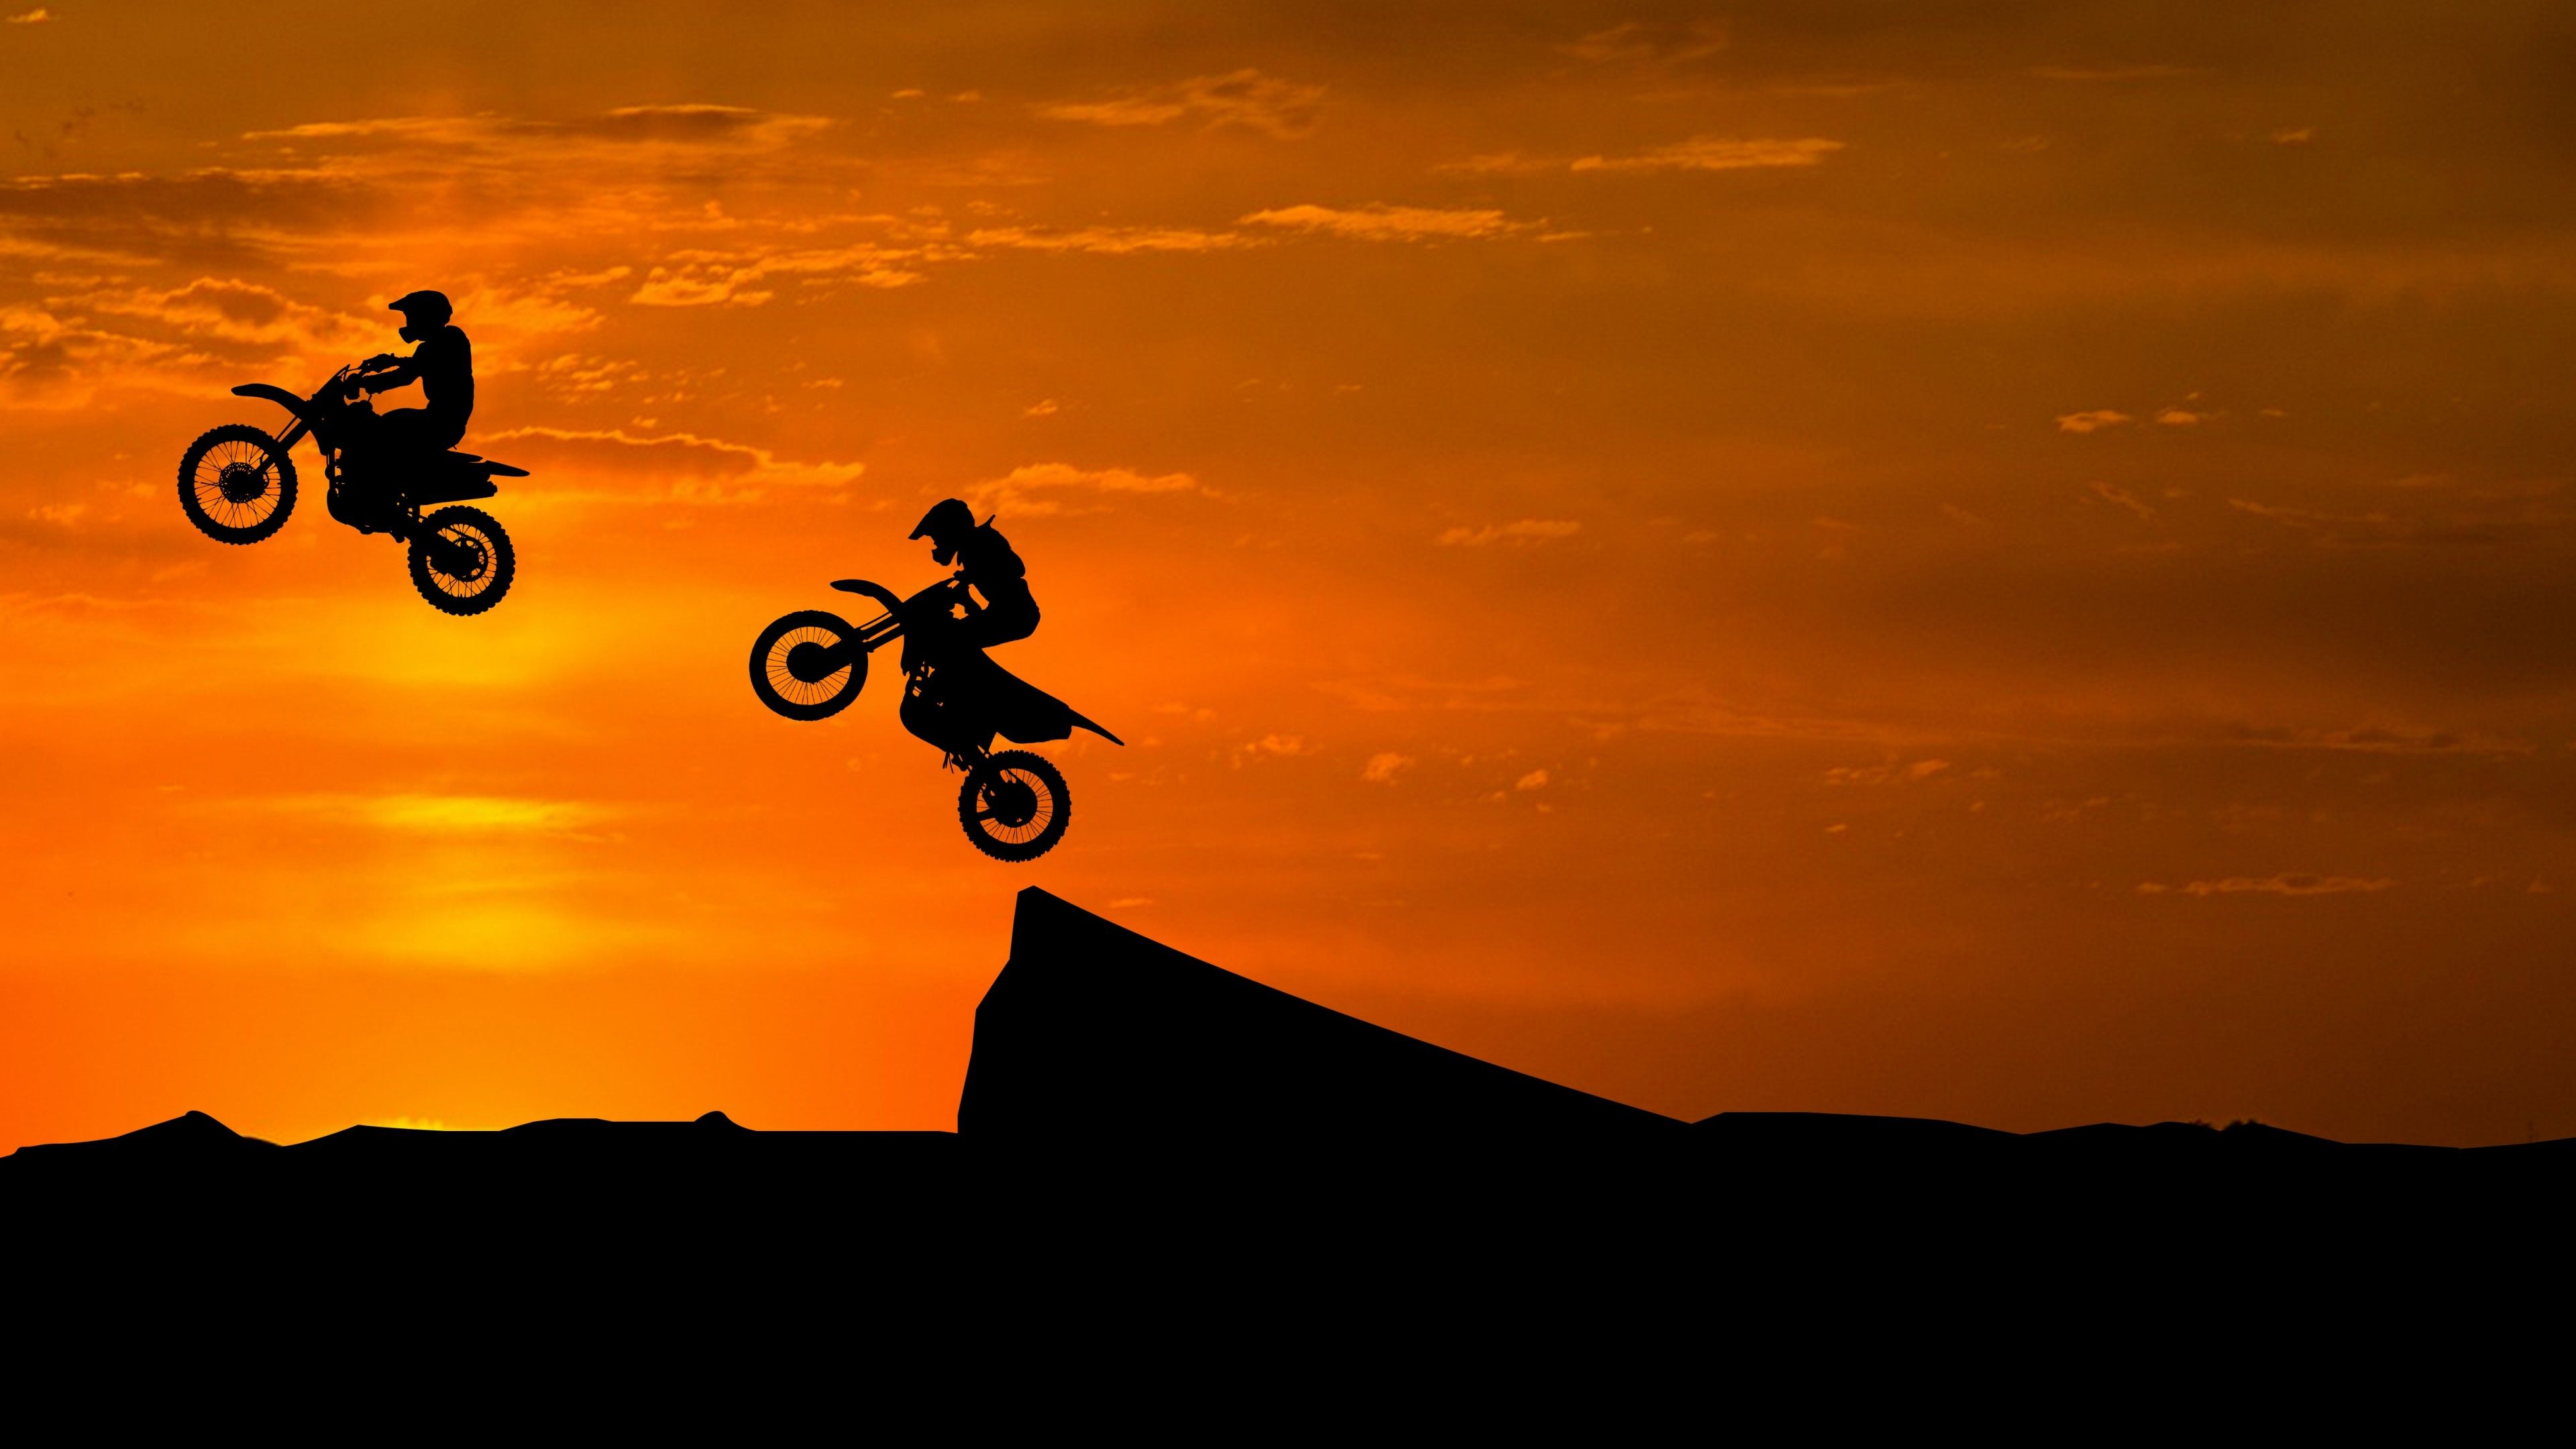 Sunset Bike Racing - Motocross free instals